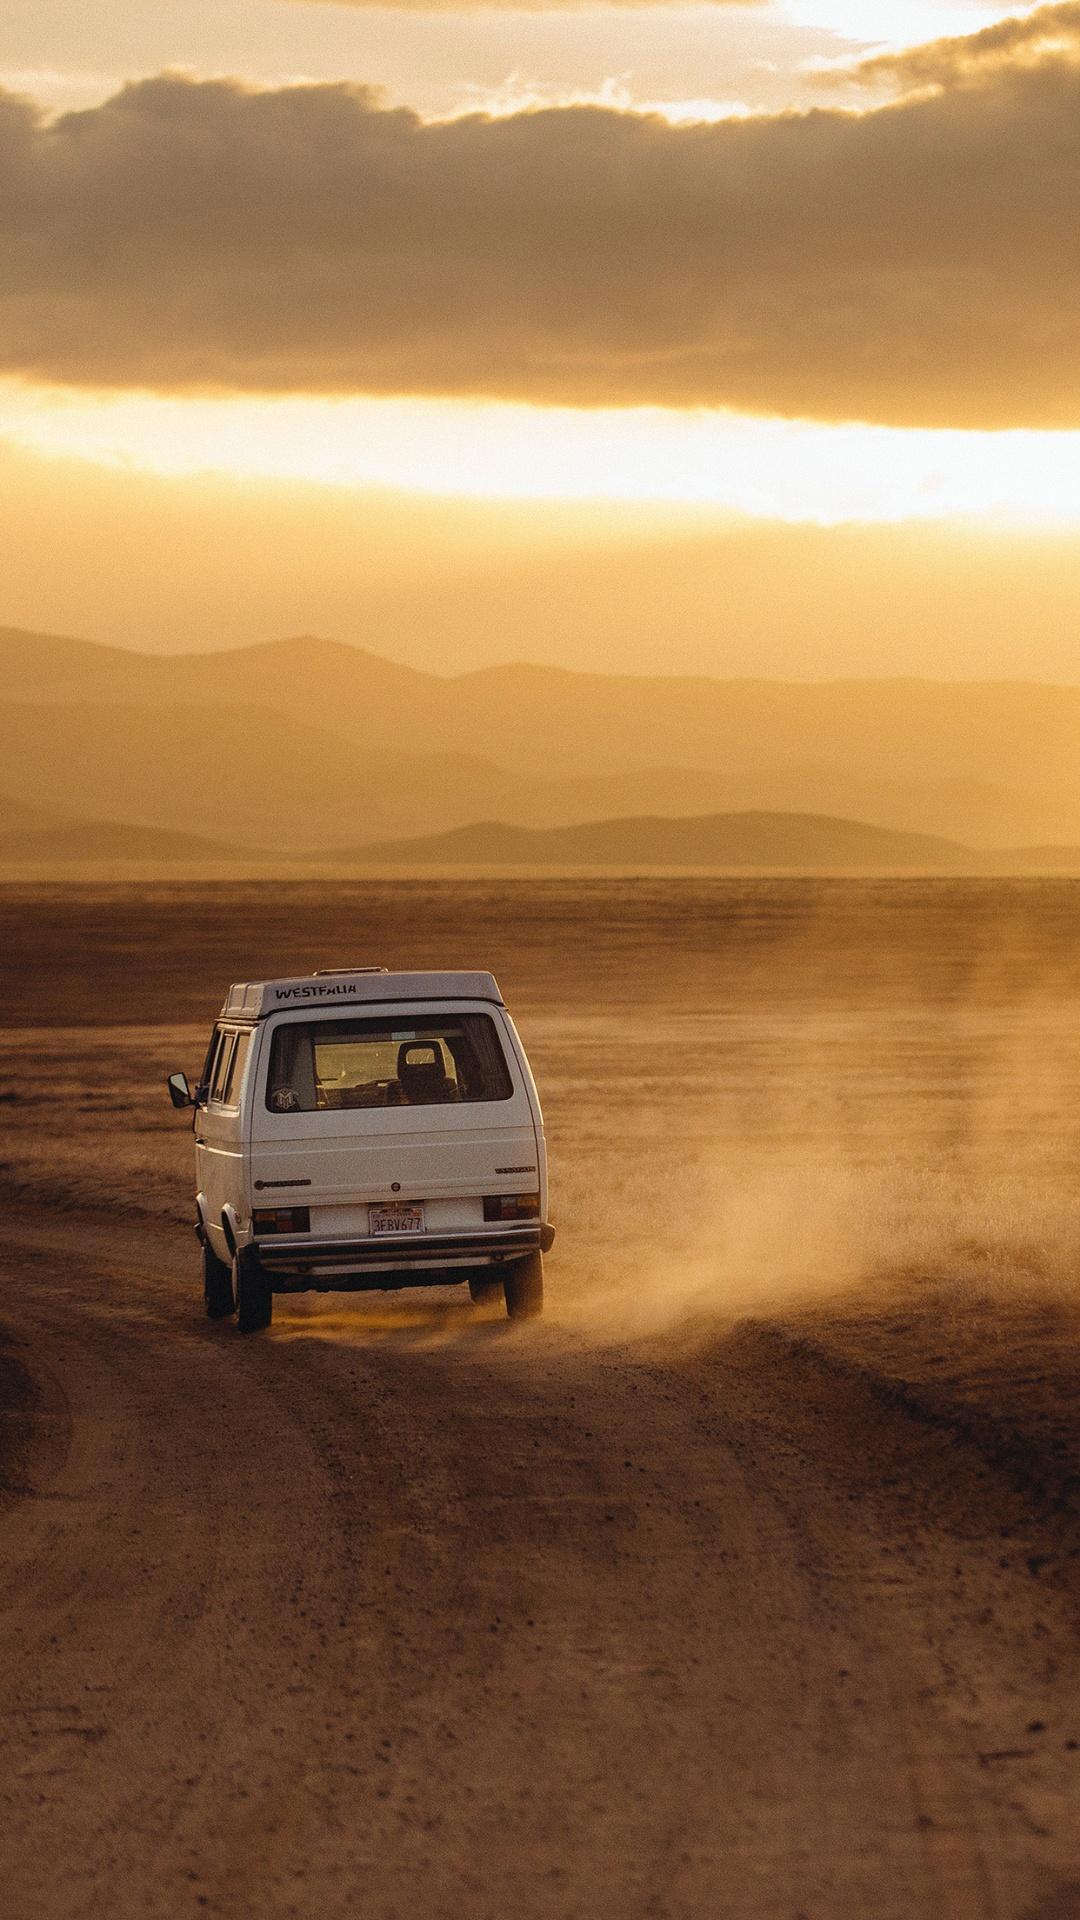 Volkswagen Transporter Desert Roadtrip iPhone 8 Wallpaper